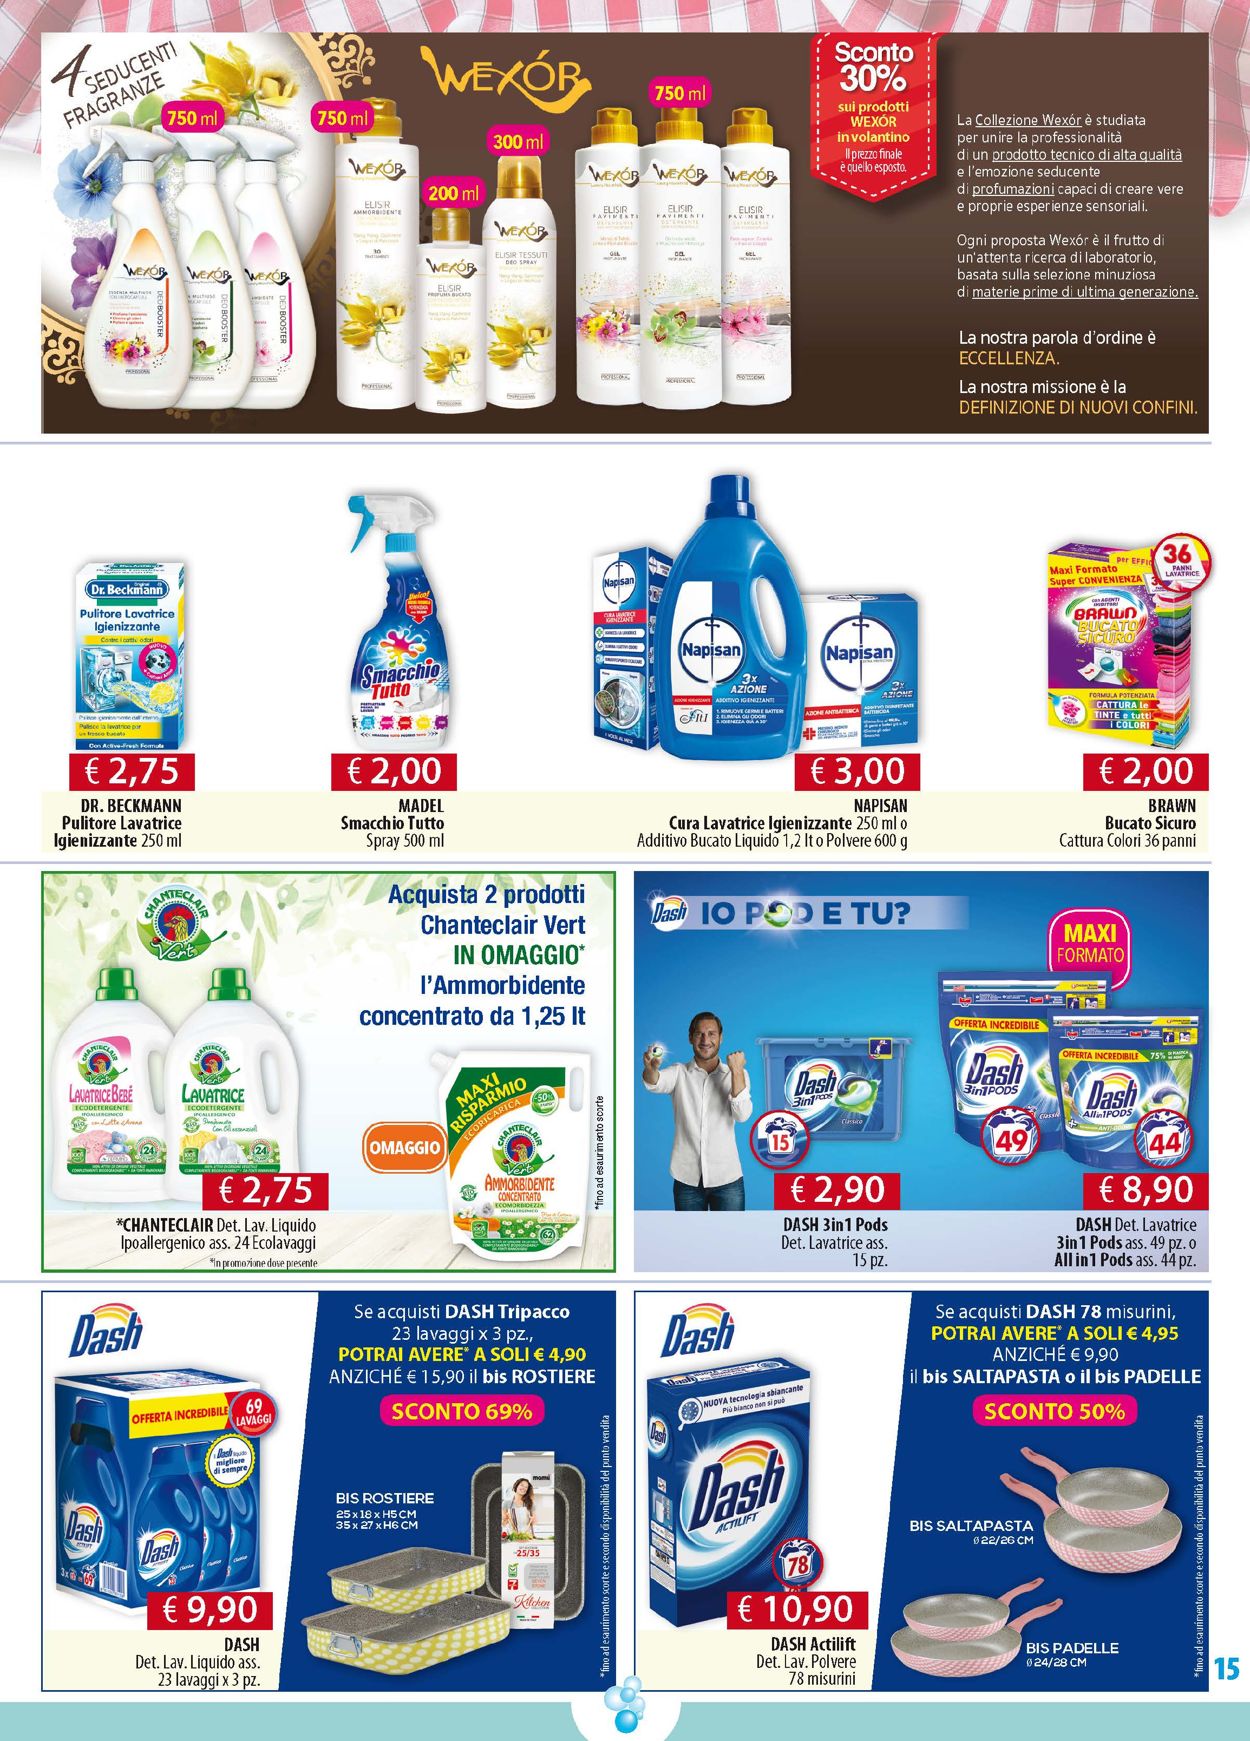 Wexor Gran Bucato Detergente Profumante – Drogheria Olimpia Shop Online